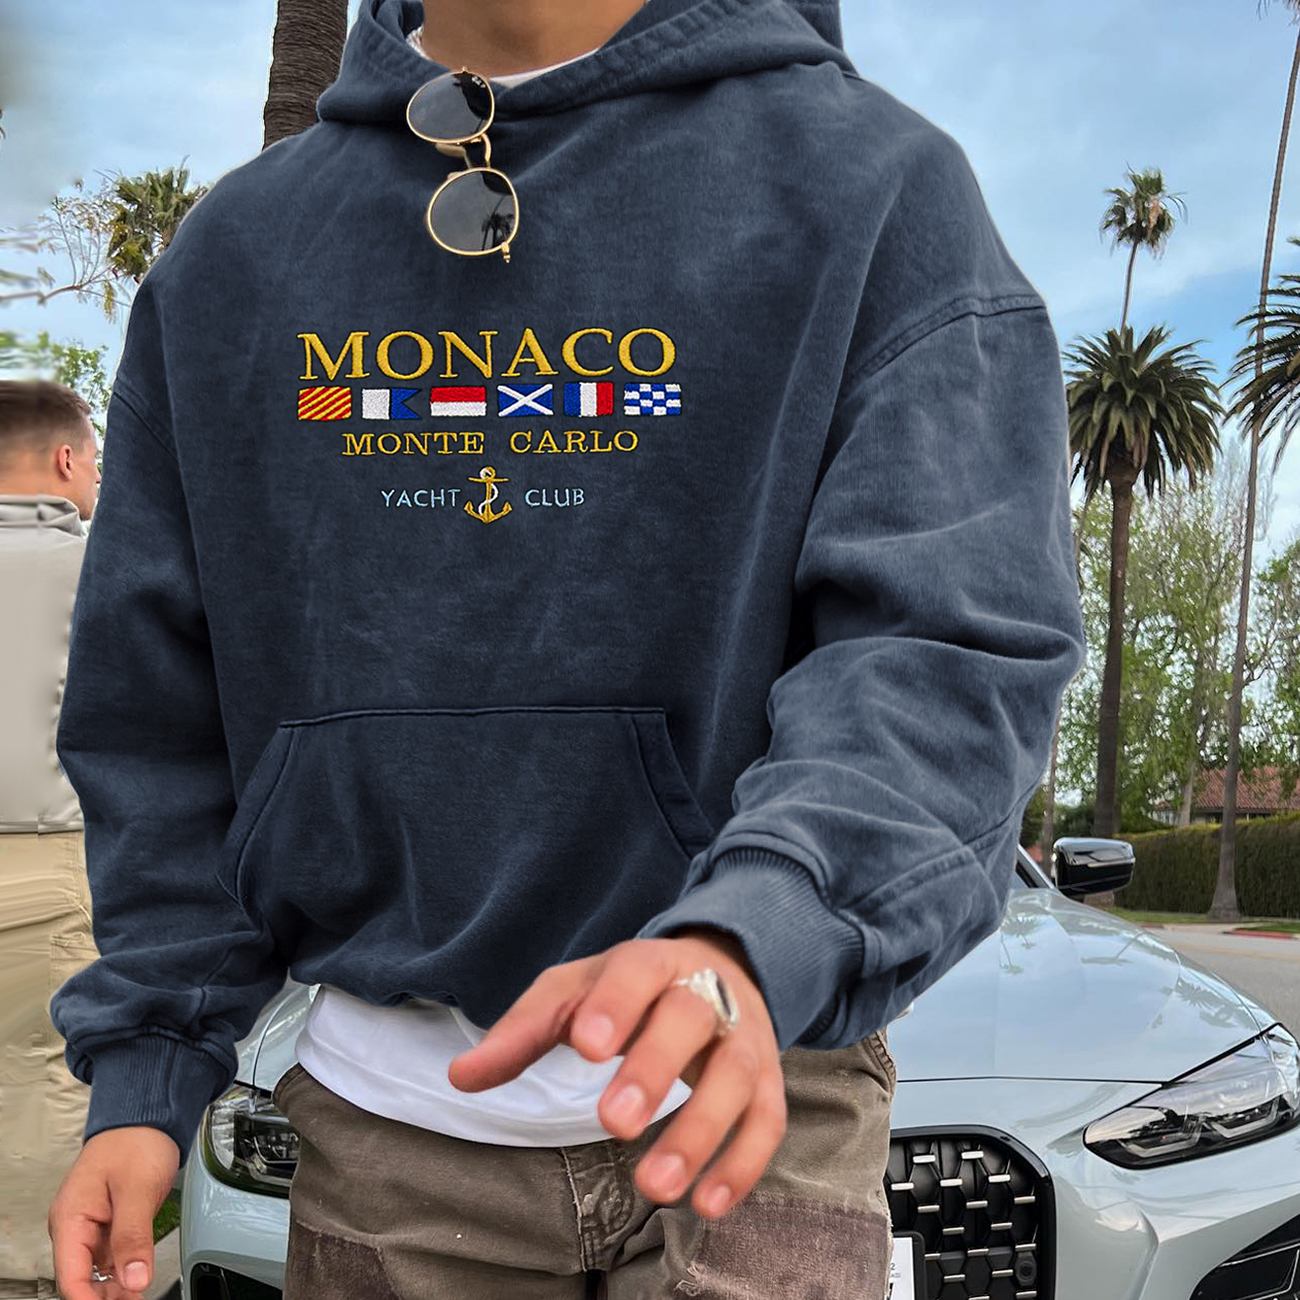 yacht club hoodie